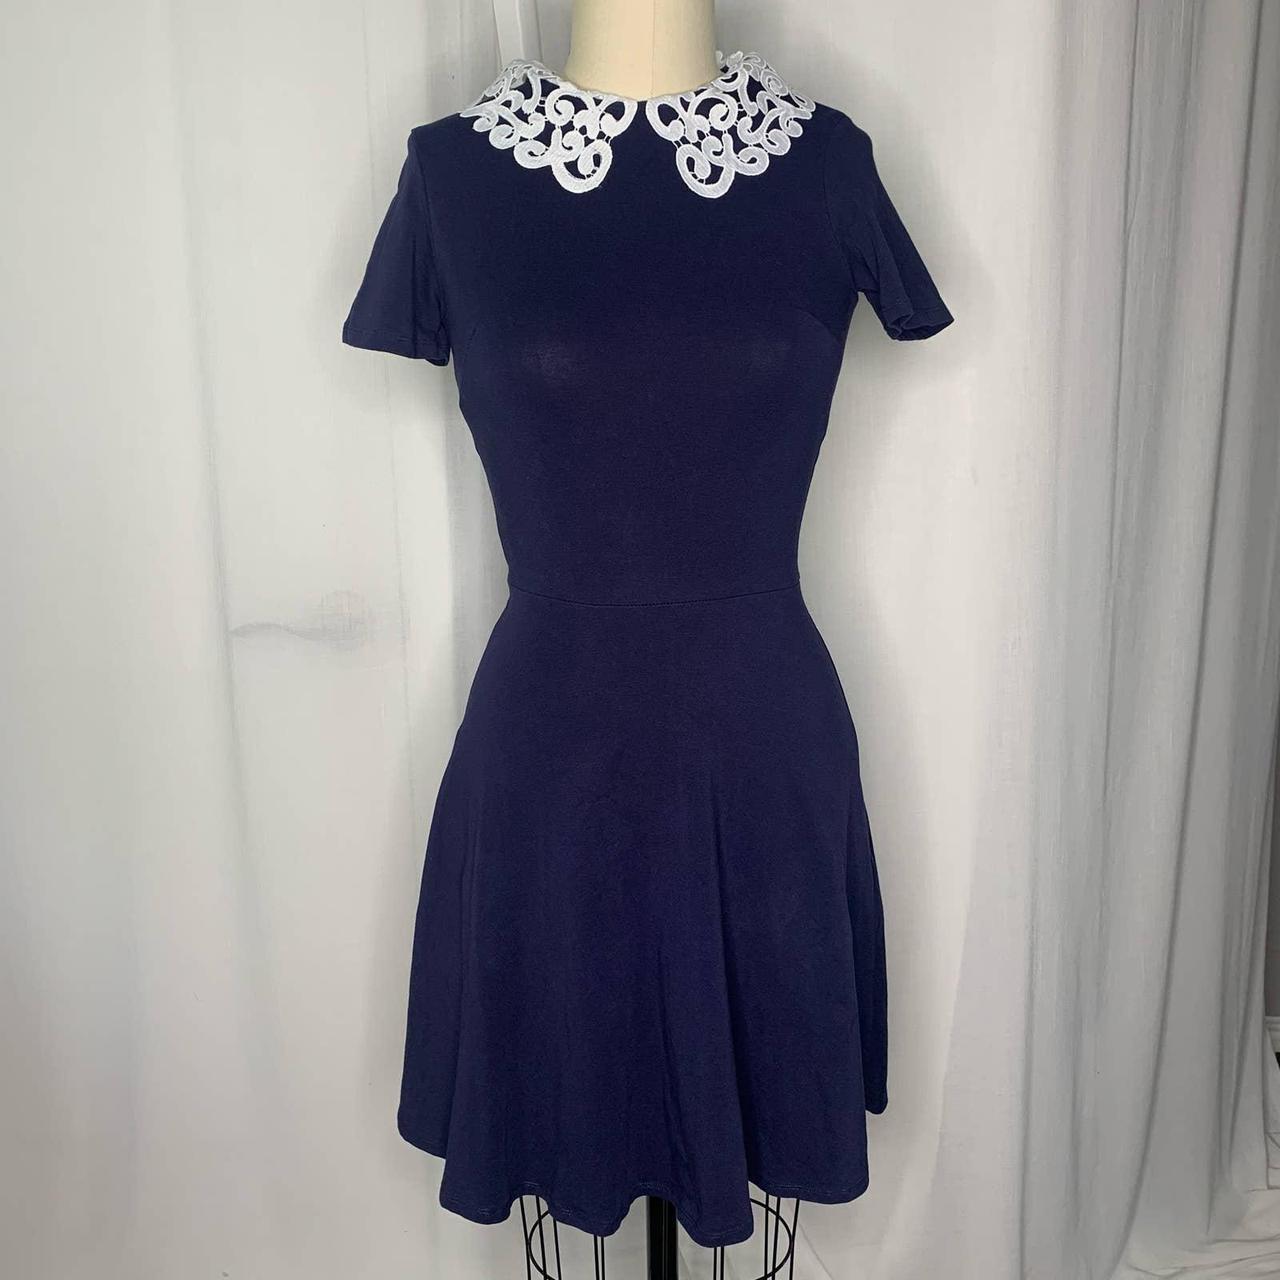 Dorothy Perkins Women's Blue and White Dress (2)